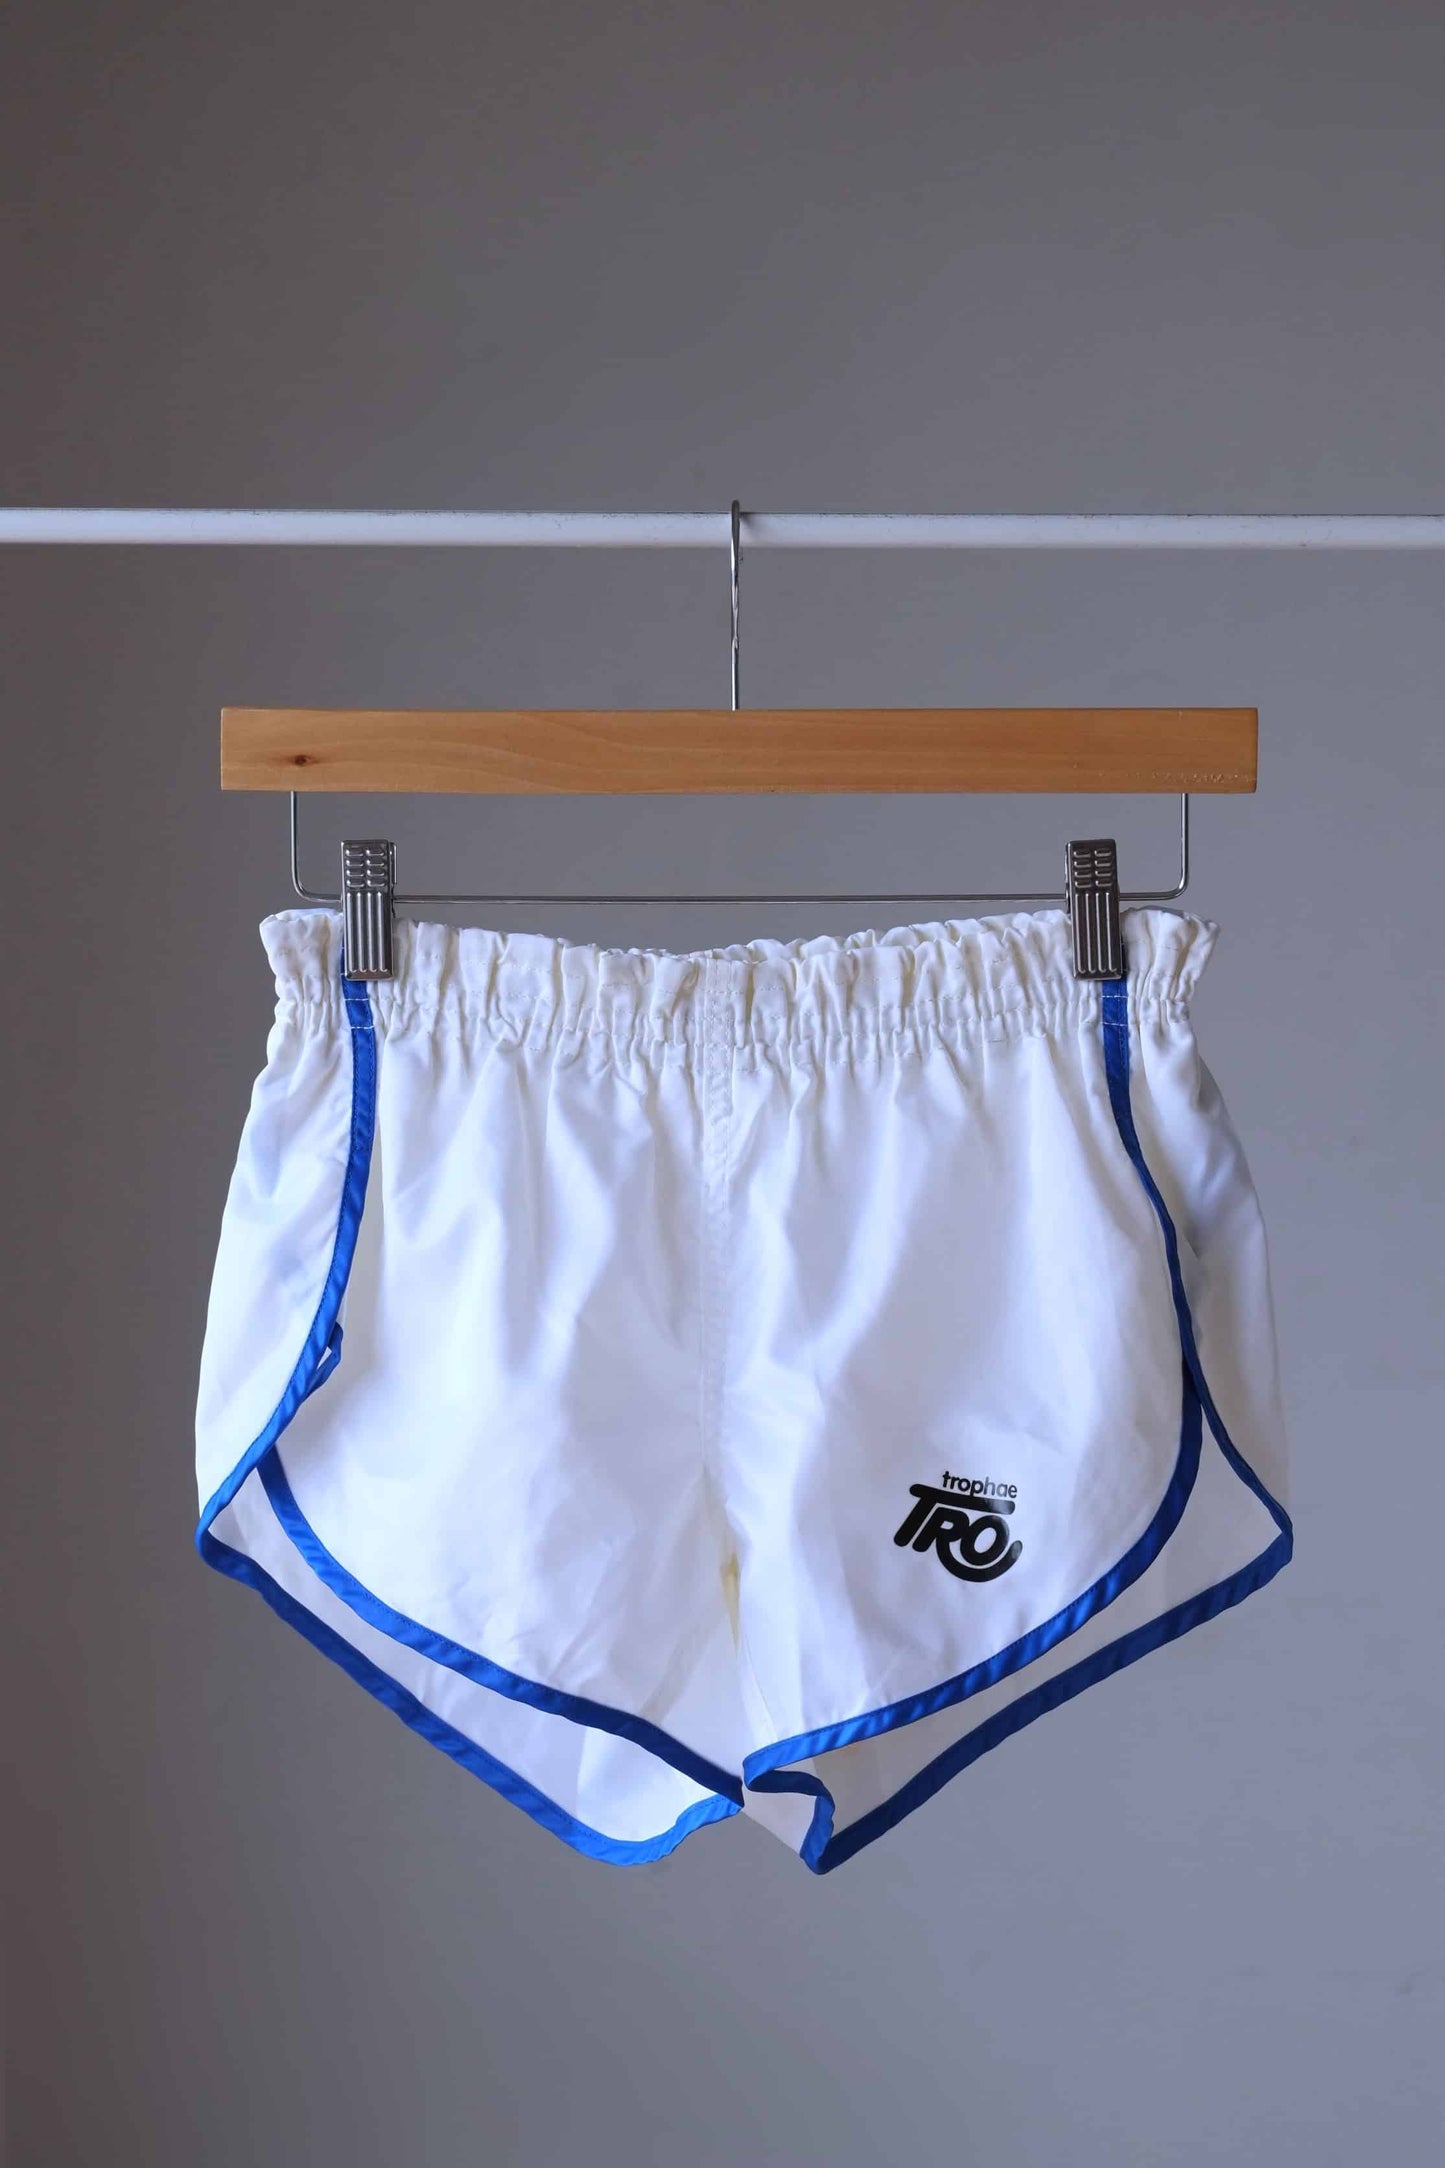 Vintage Satin 80's Jogging Shorts white blue